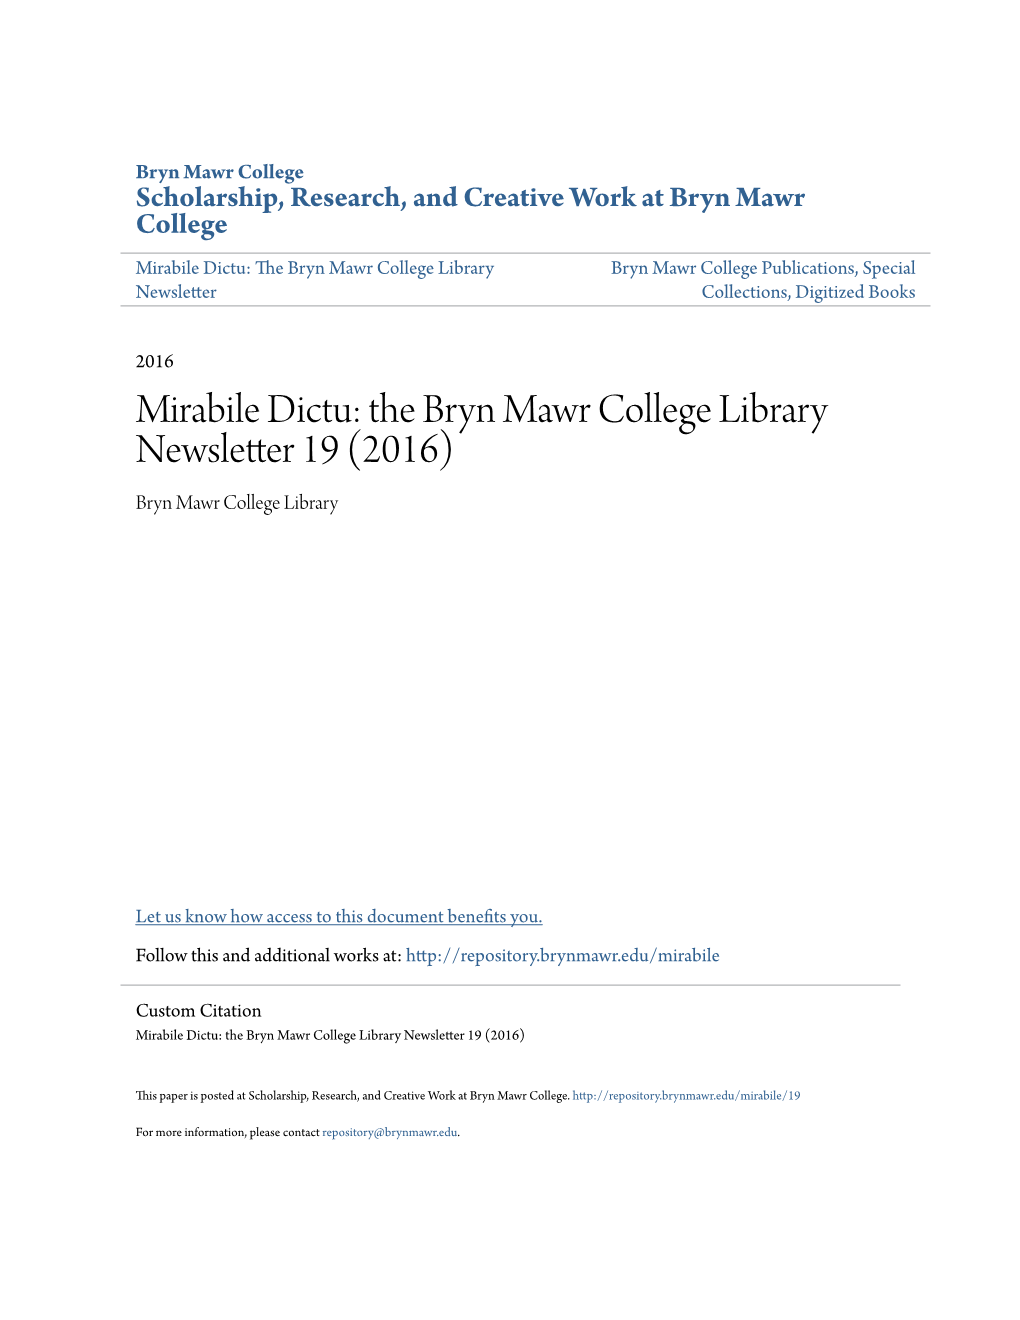 Mirabile Dictu: the Bryn Mawr College Library Newsletter 19 (2016) Bryn Mawr College Library